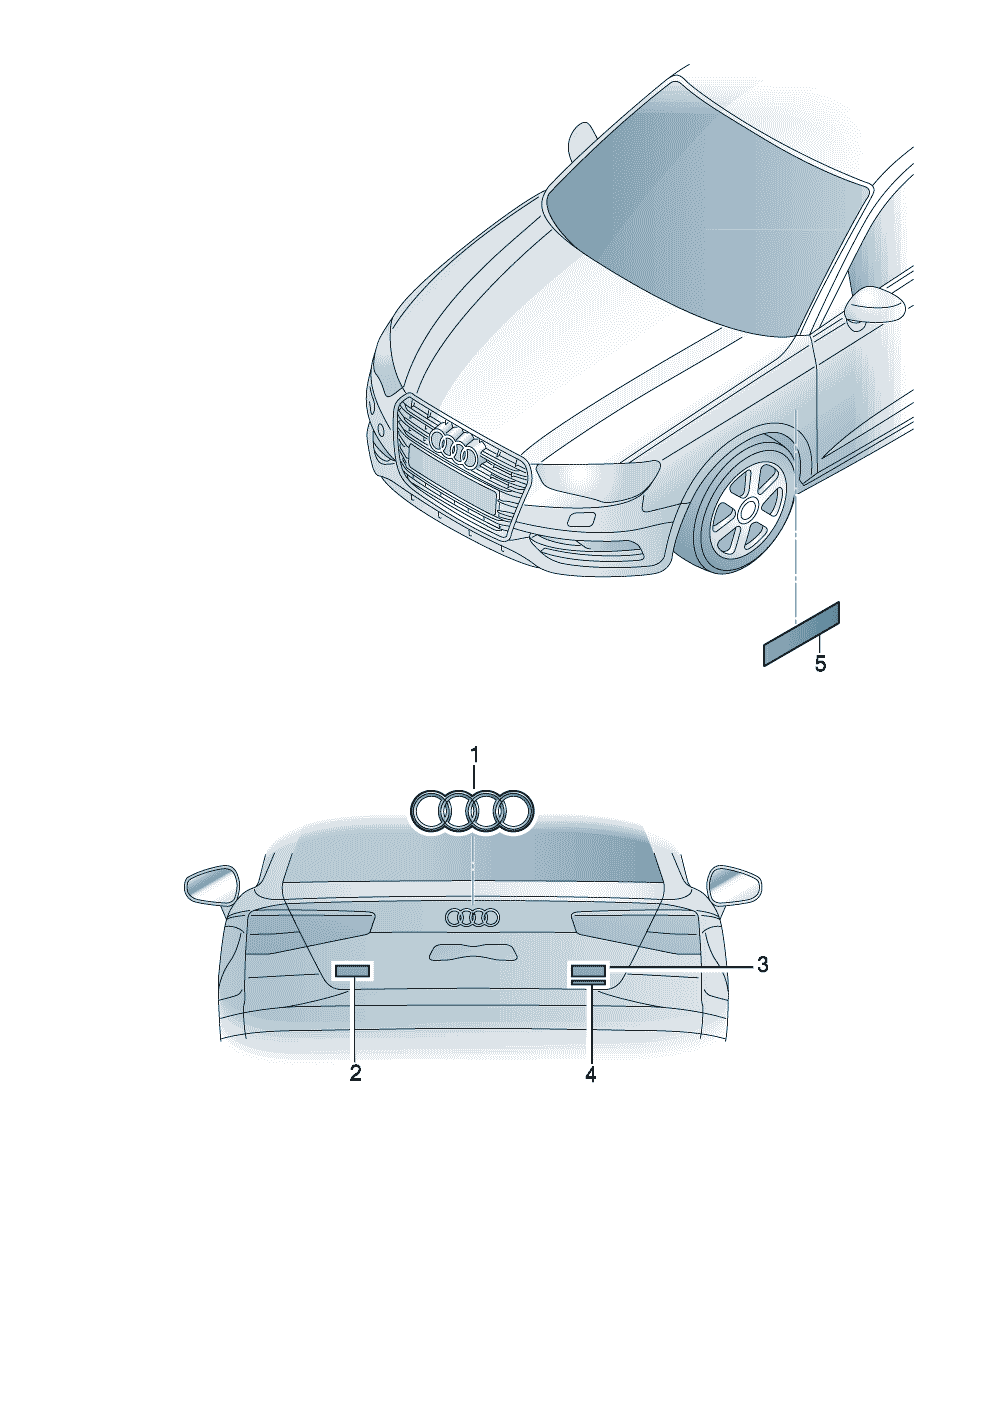 inscriptions/lettering rearside - Audi A3 Cabriolet - a3ca